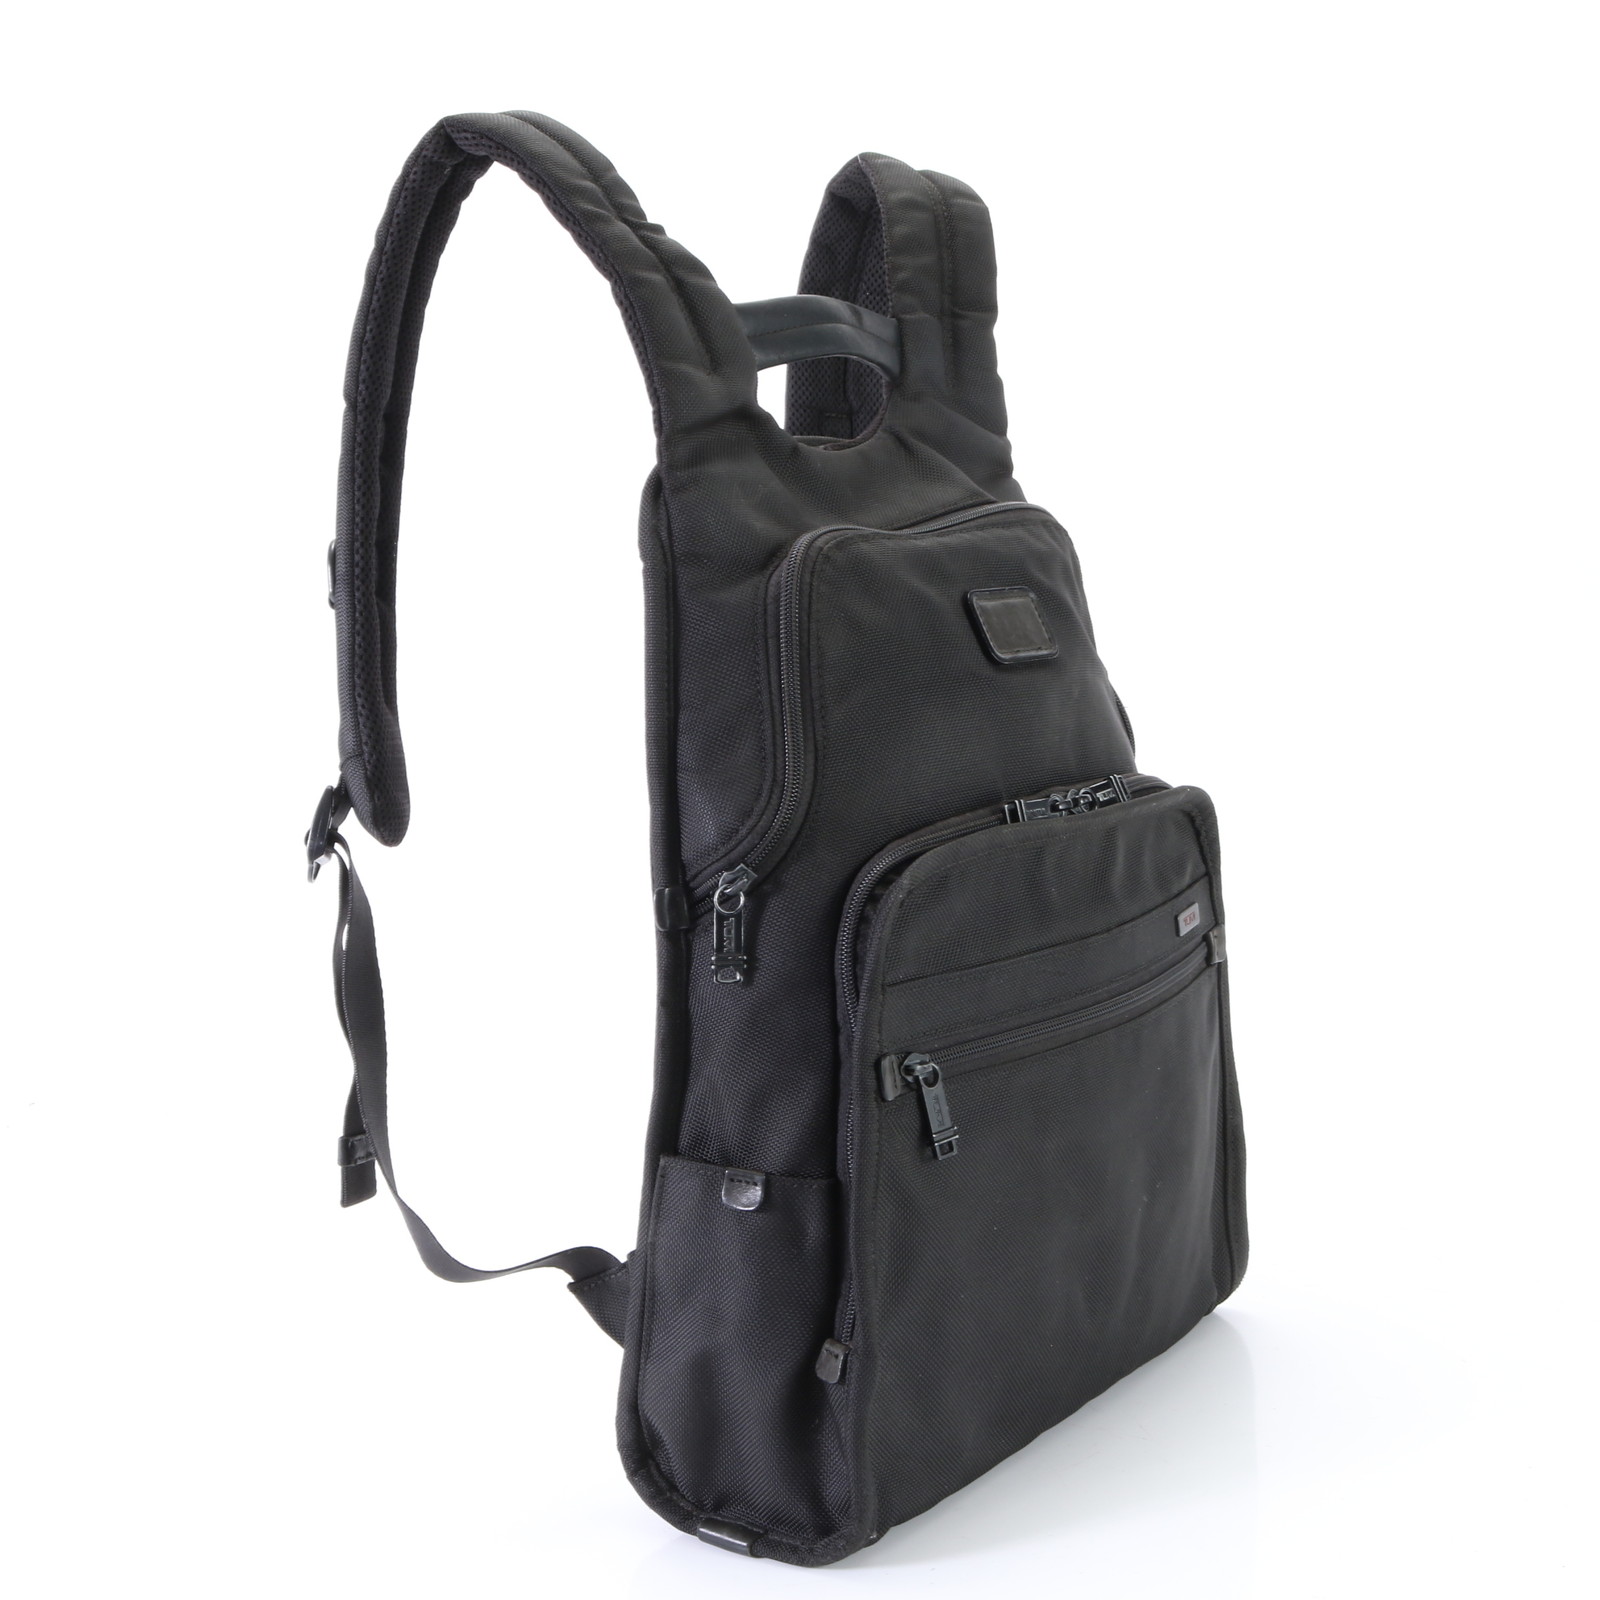 1 jpy TUMI Tumi rucksack rucksack backpack shoulder bag business book kind bag brand high class popular standard gentleman HHY Q4-4